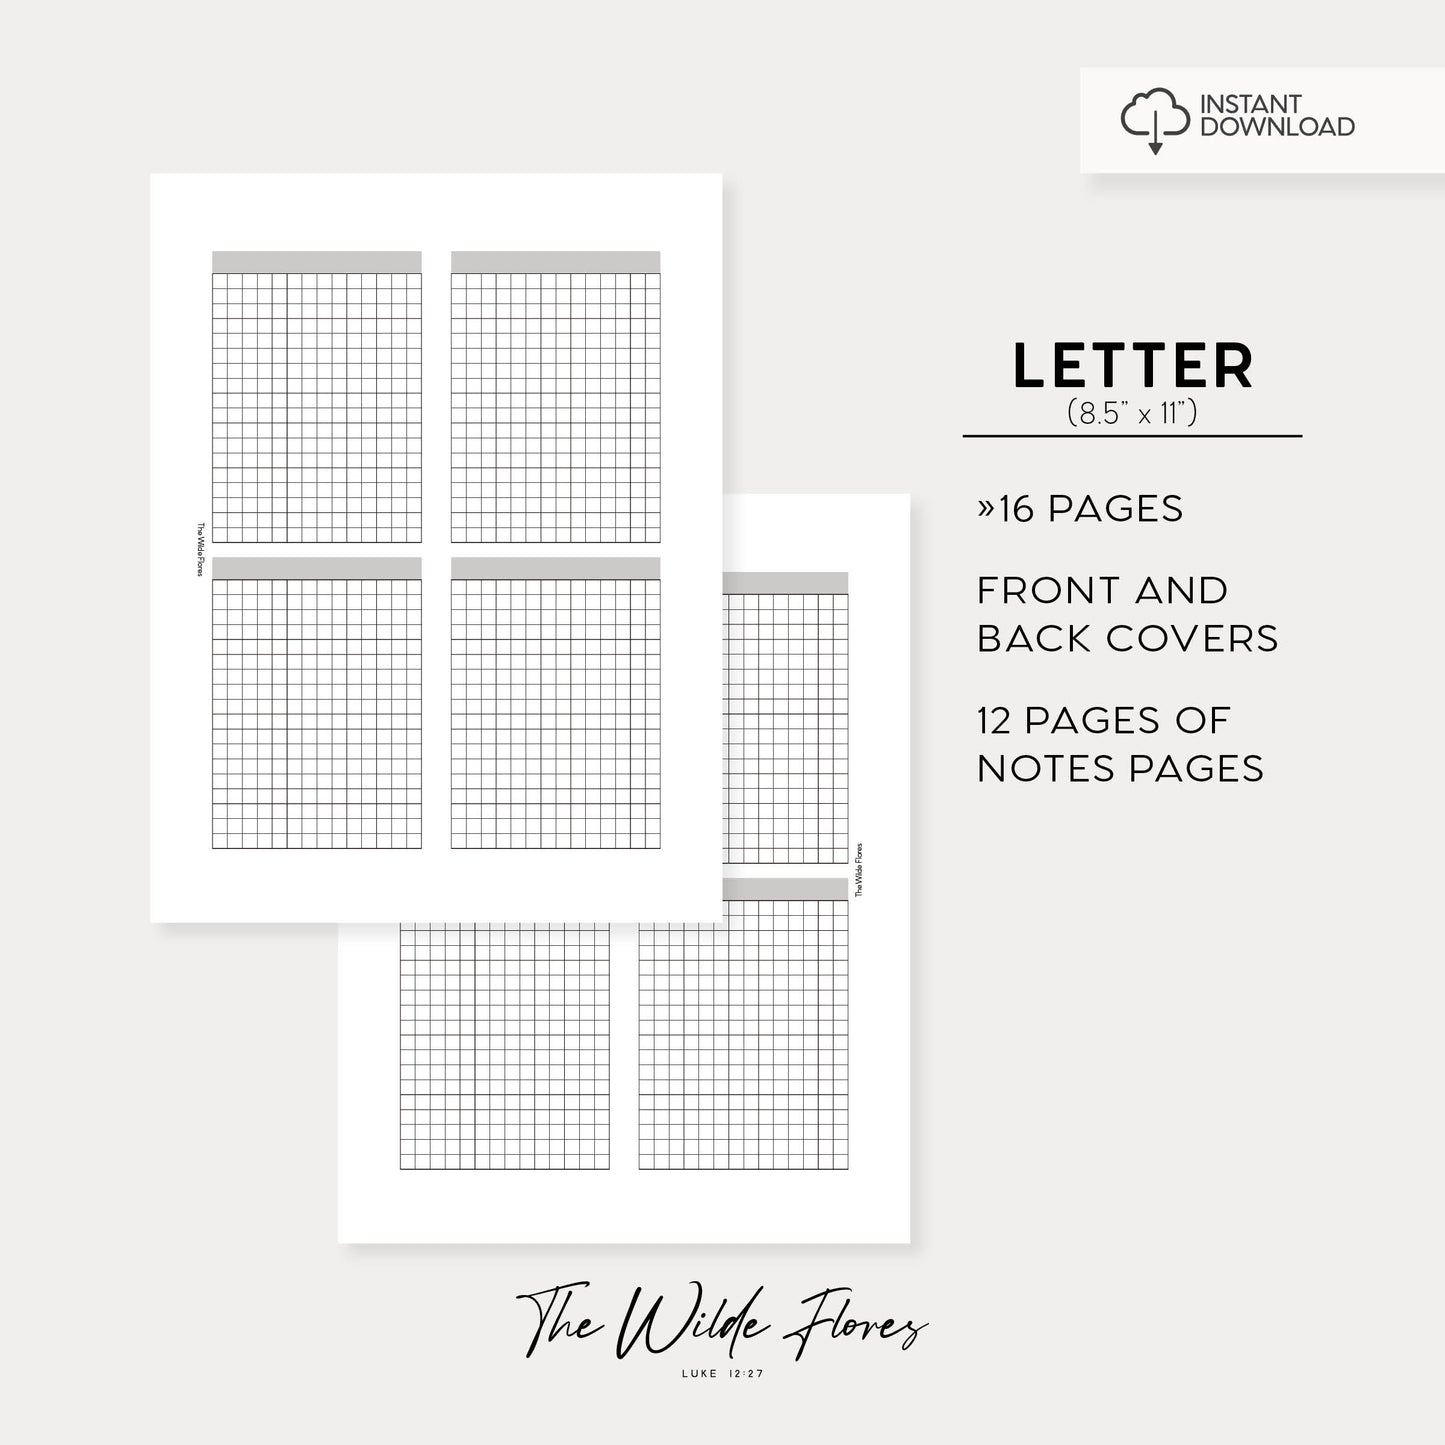 Quad Grid Note Pages: Letter Size Printable